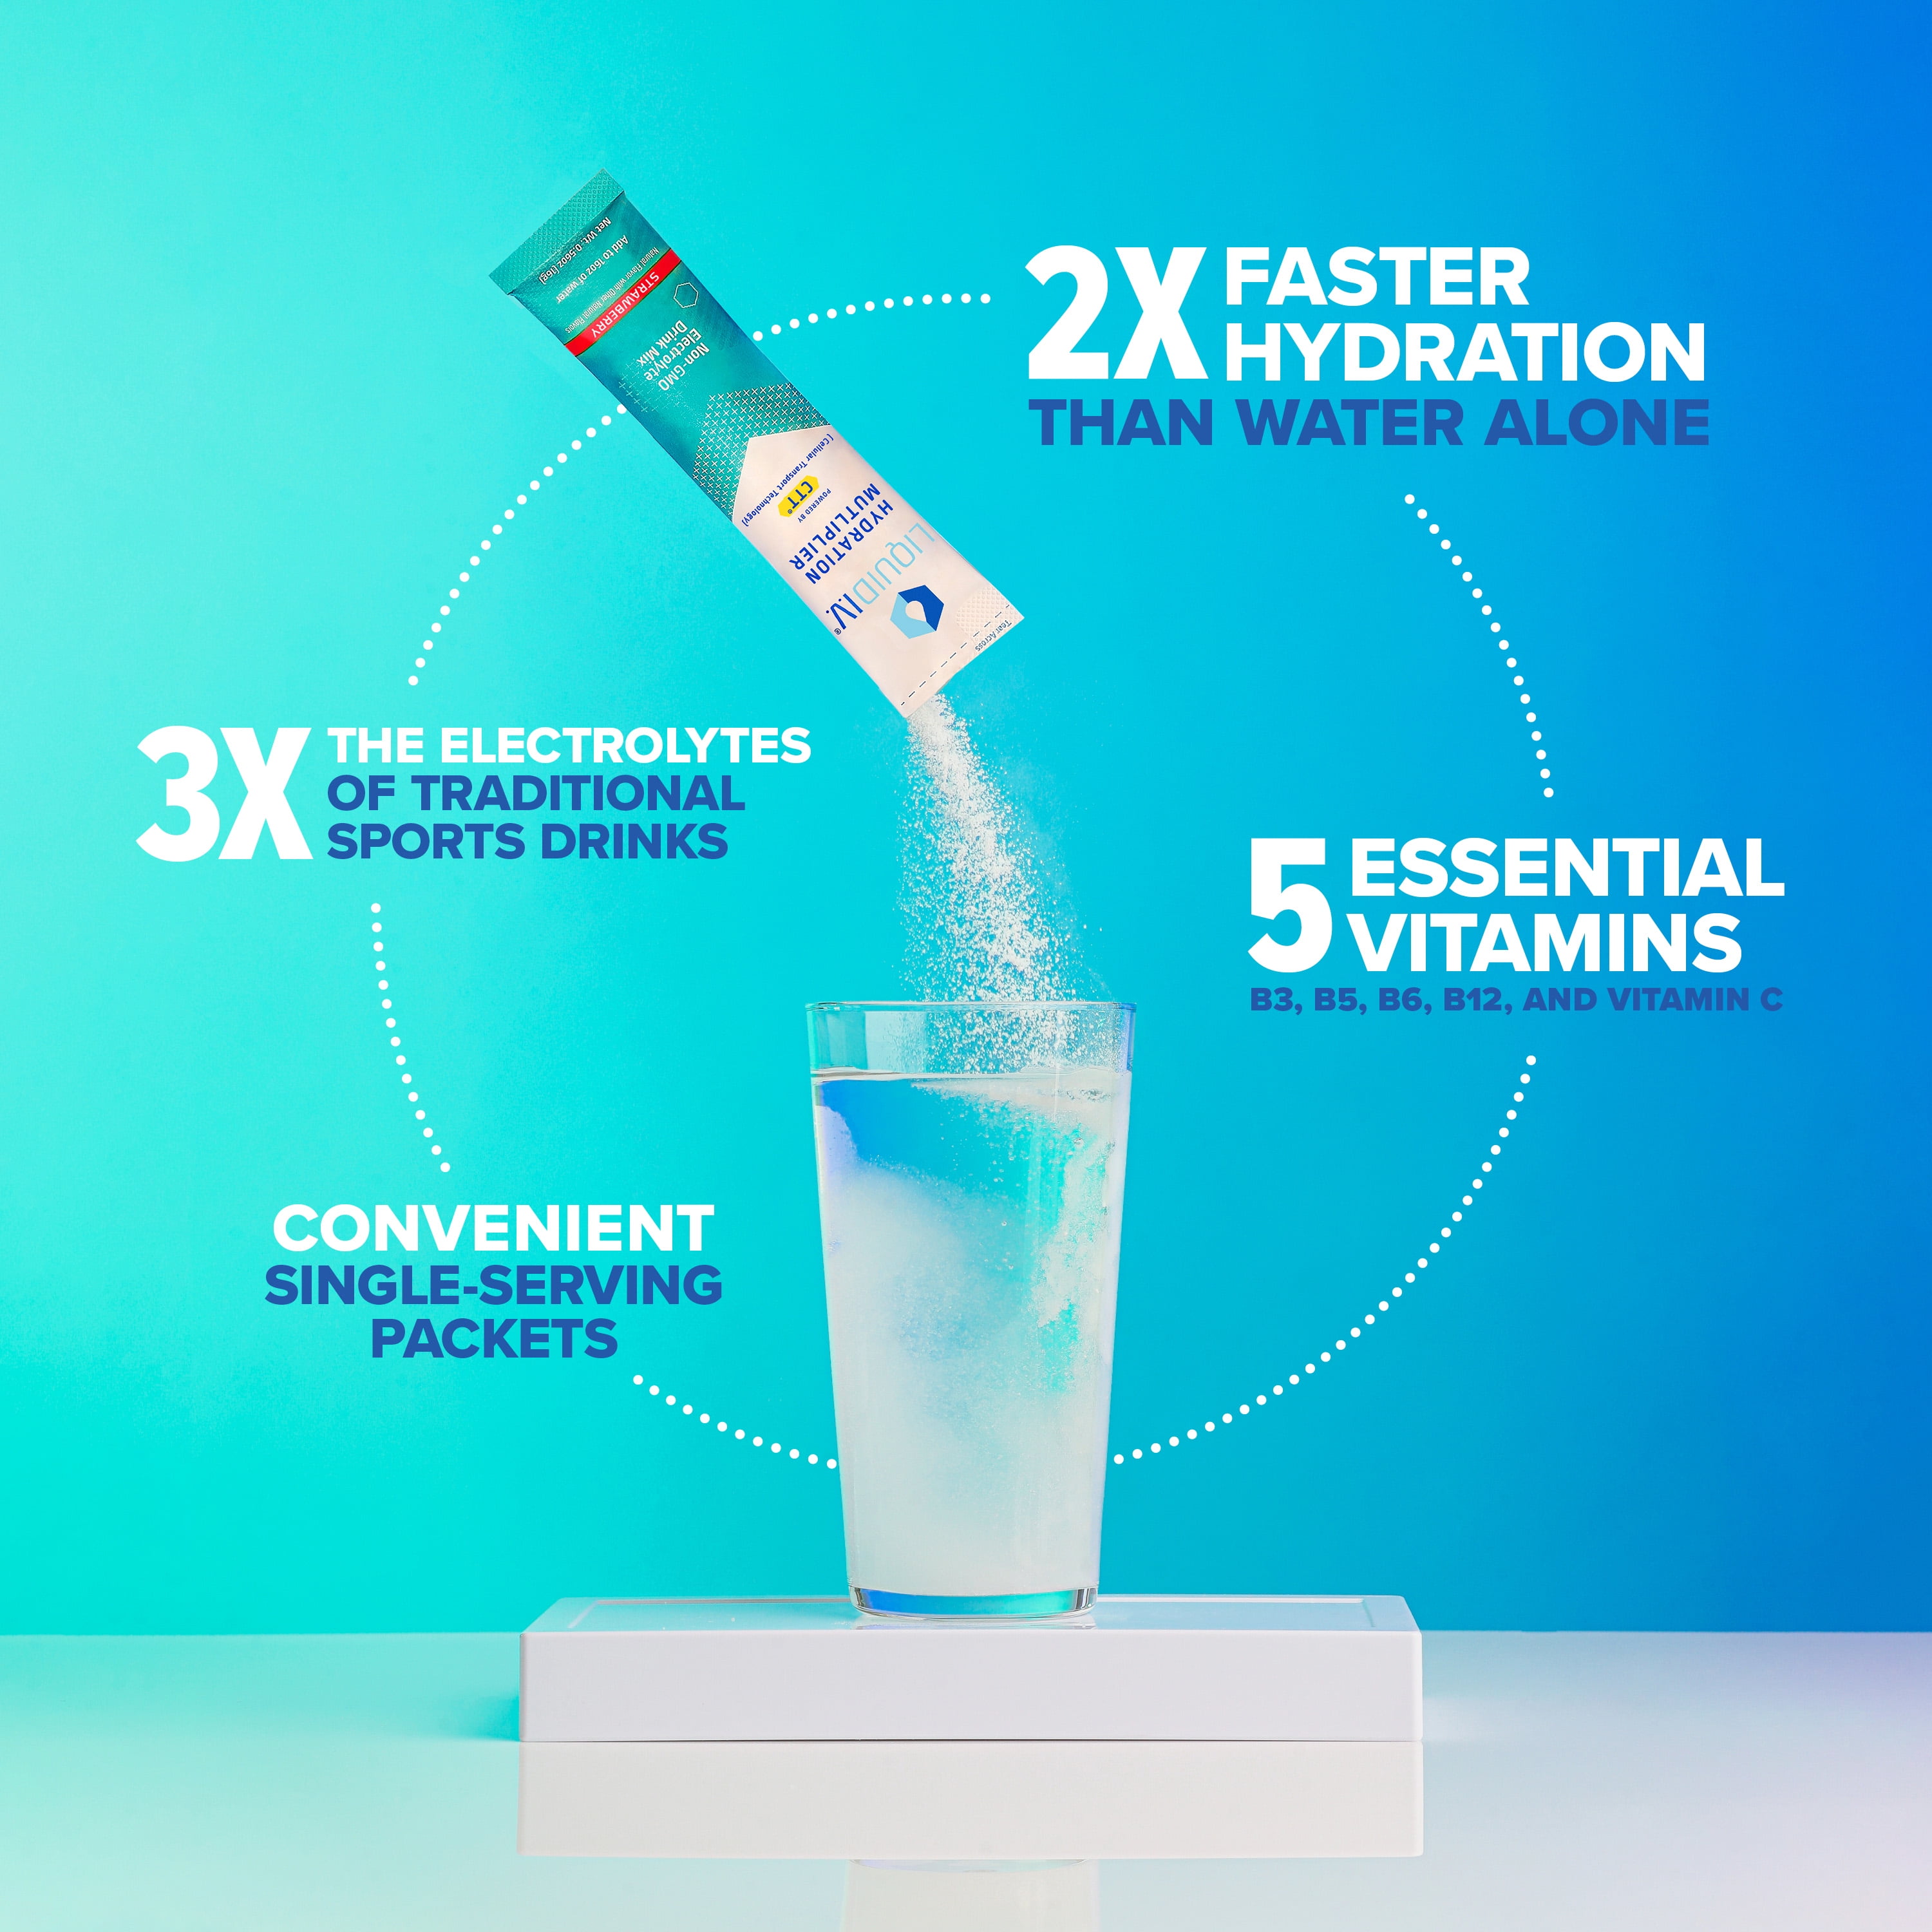 Liquid I.V. Hydration Multiplier Electrolyte Drink Mix Packets, 6